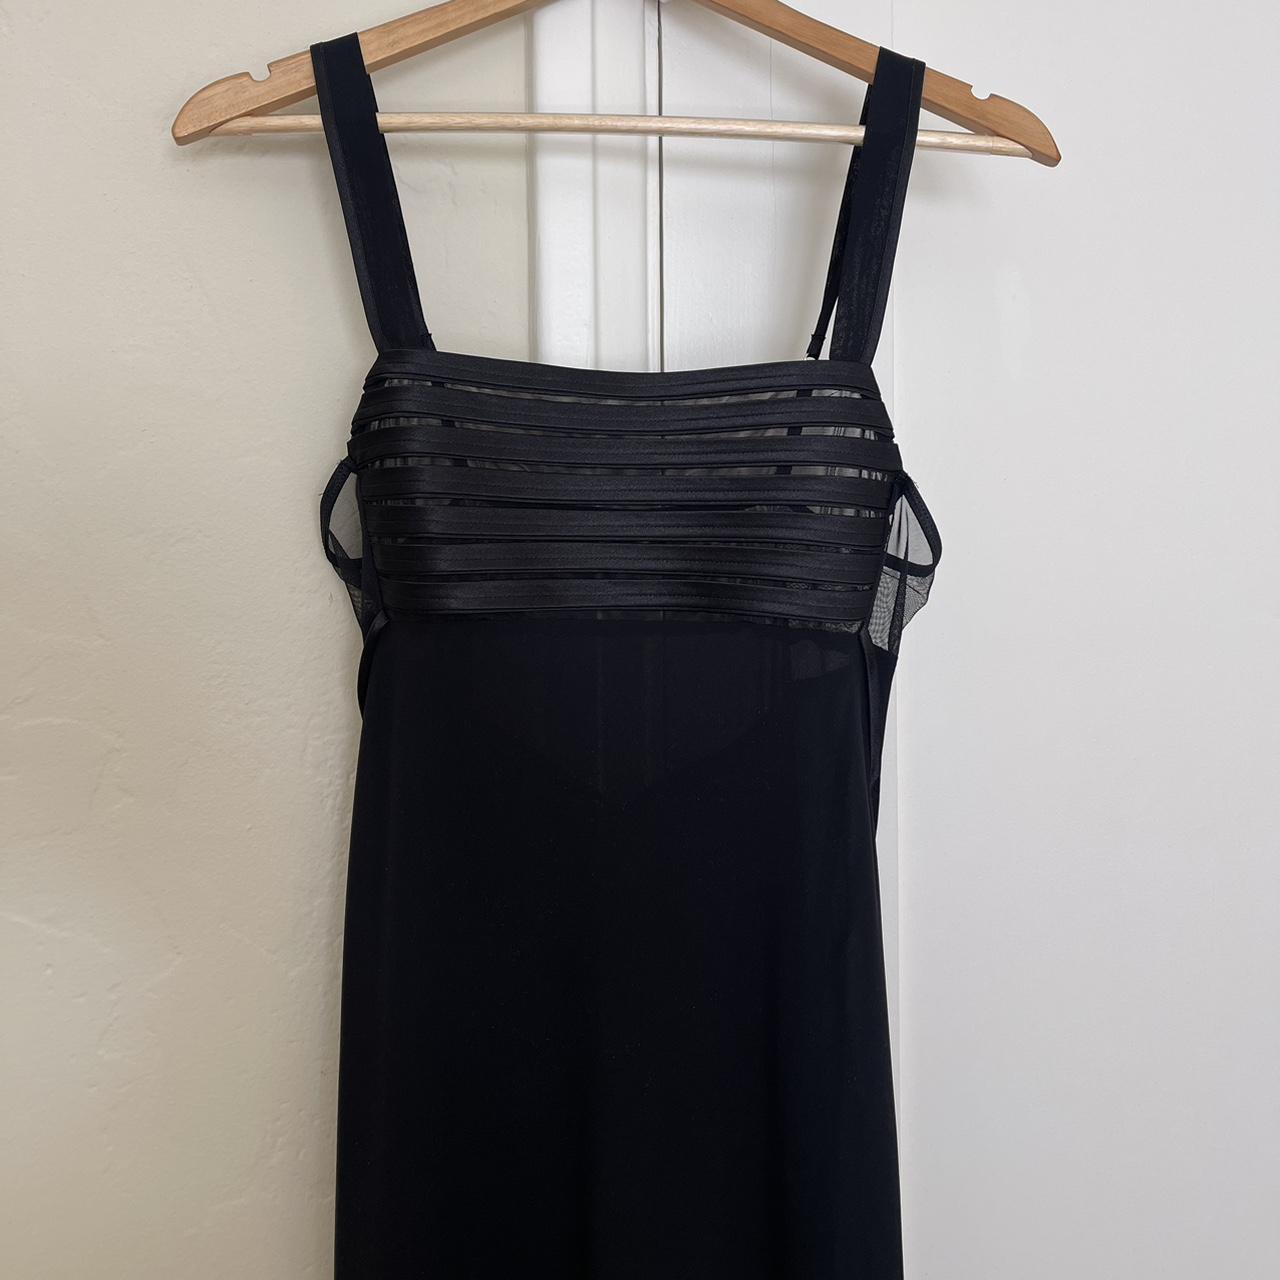 Stunning vintage black slip dress with satin strips... - Depop